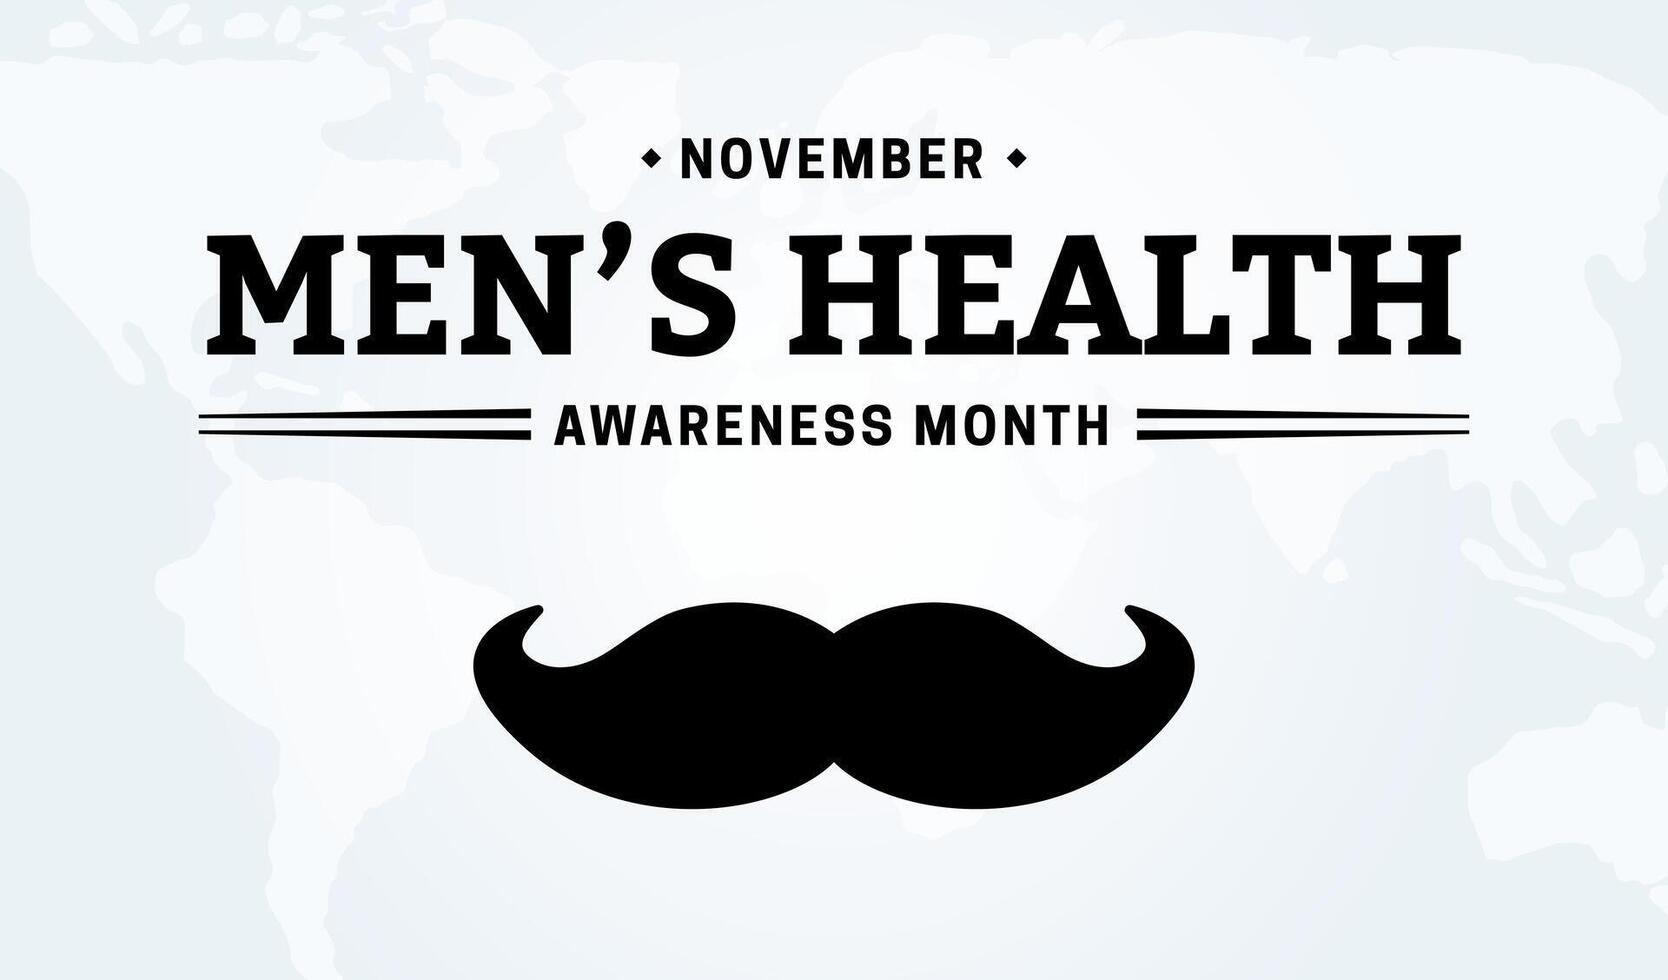 Men's Health Awareness Month Background Illustration vector